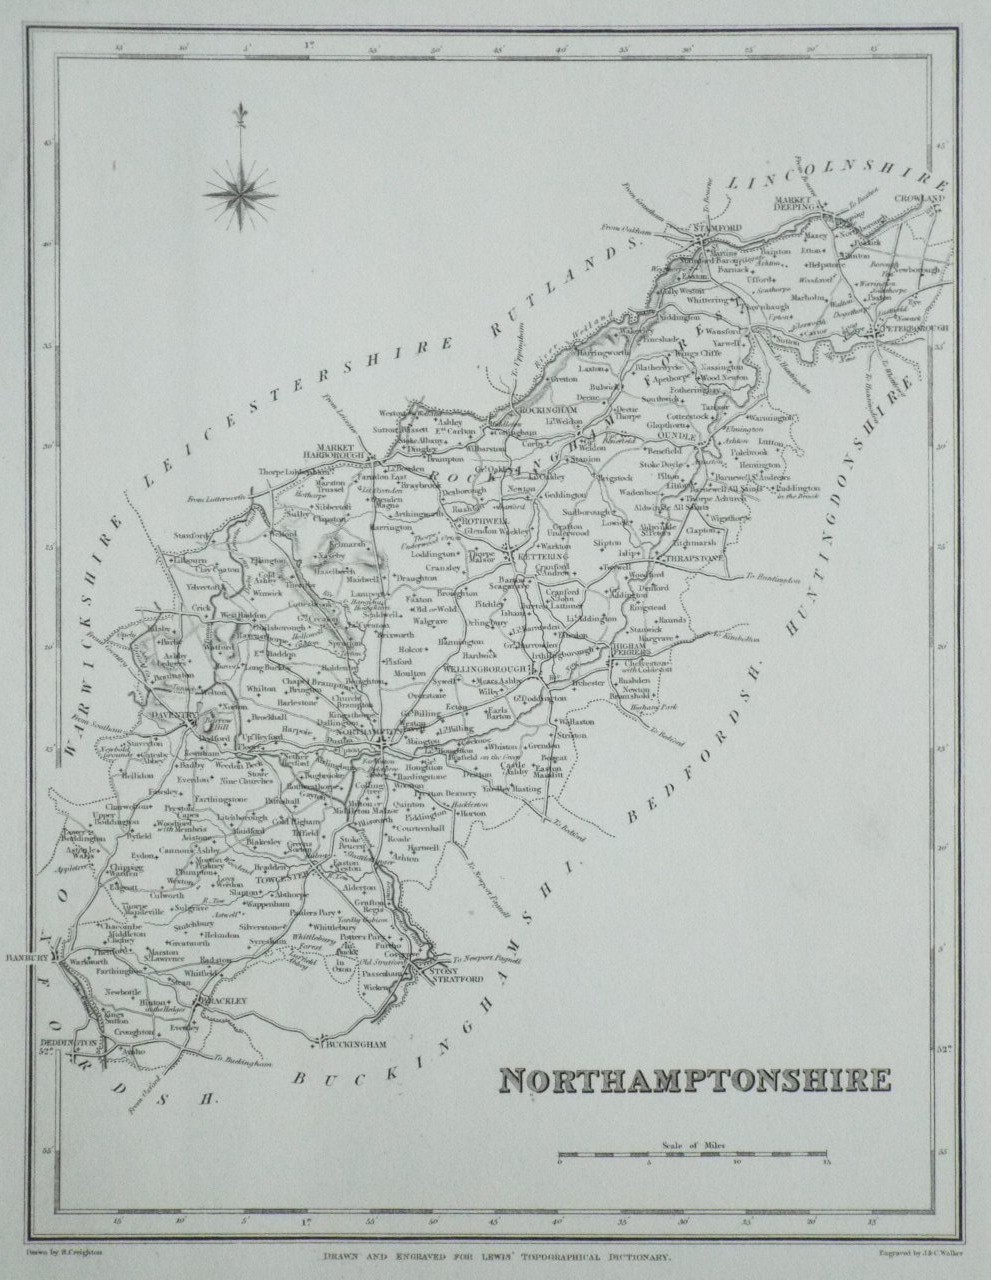 Map of Northamptonshire - Lewis